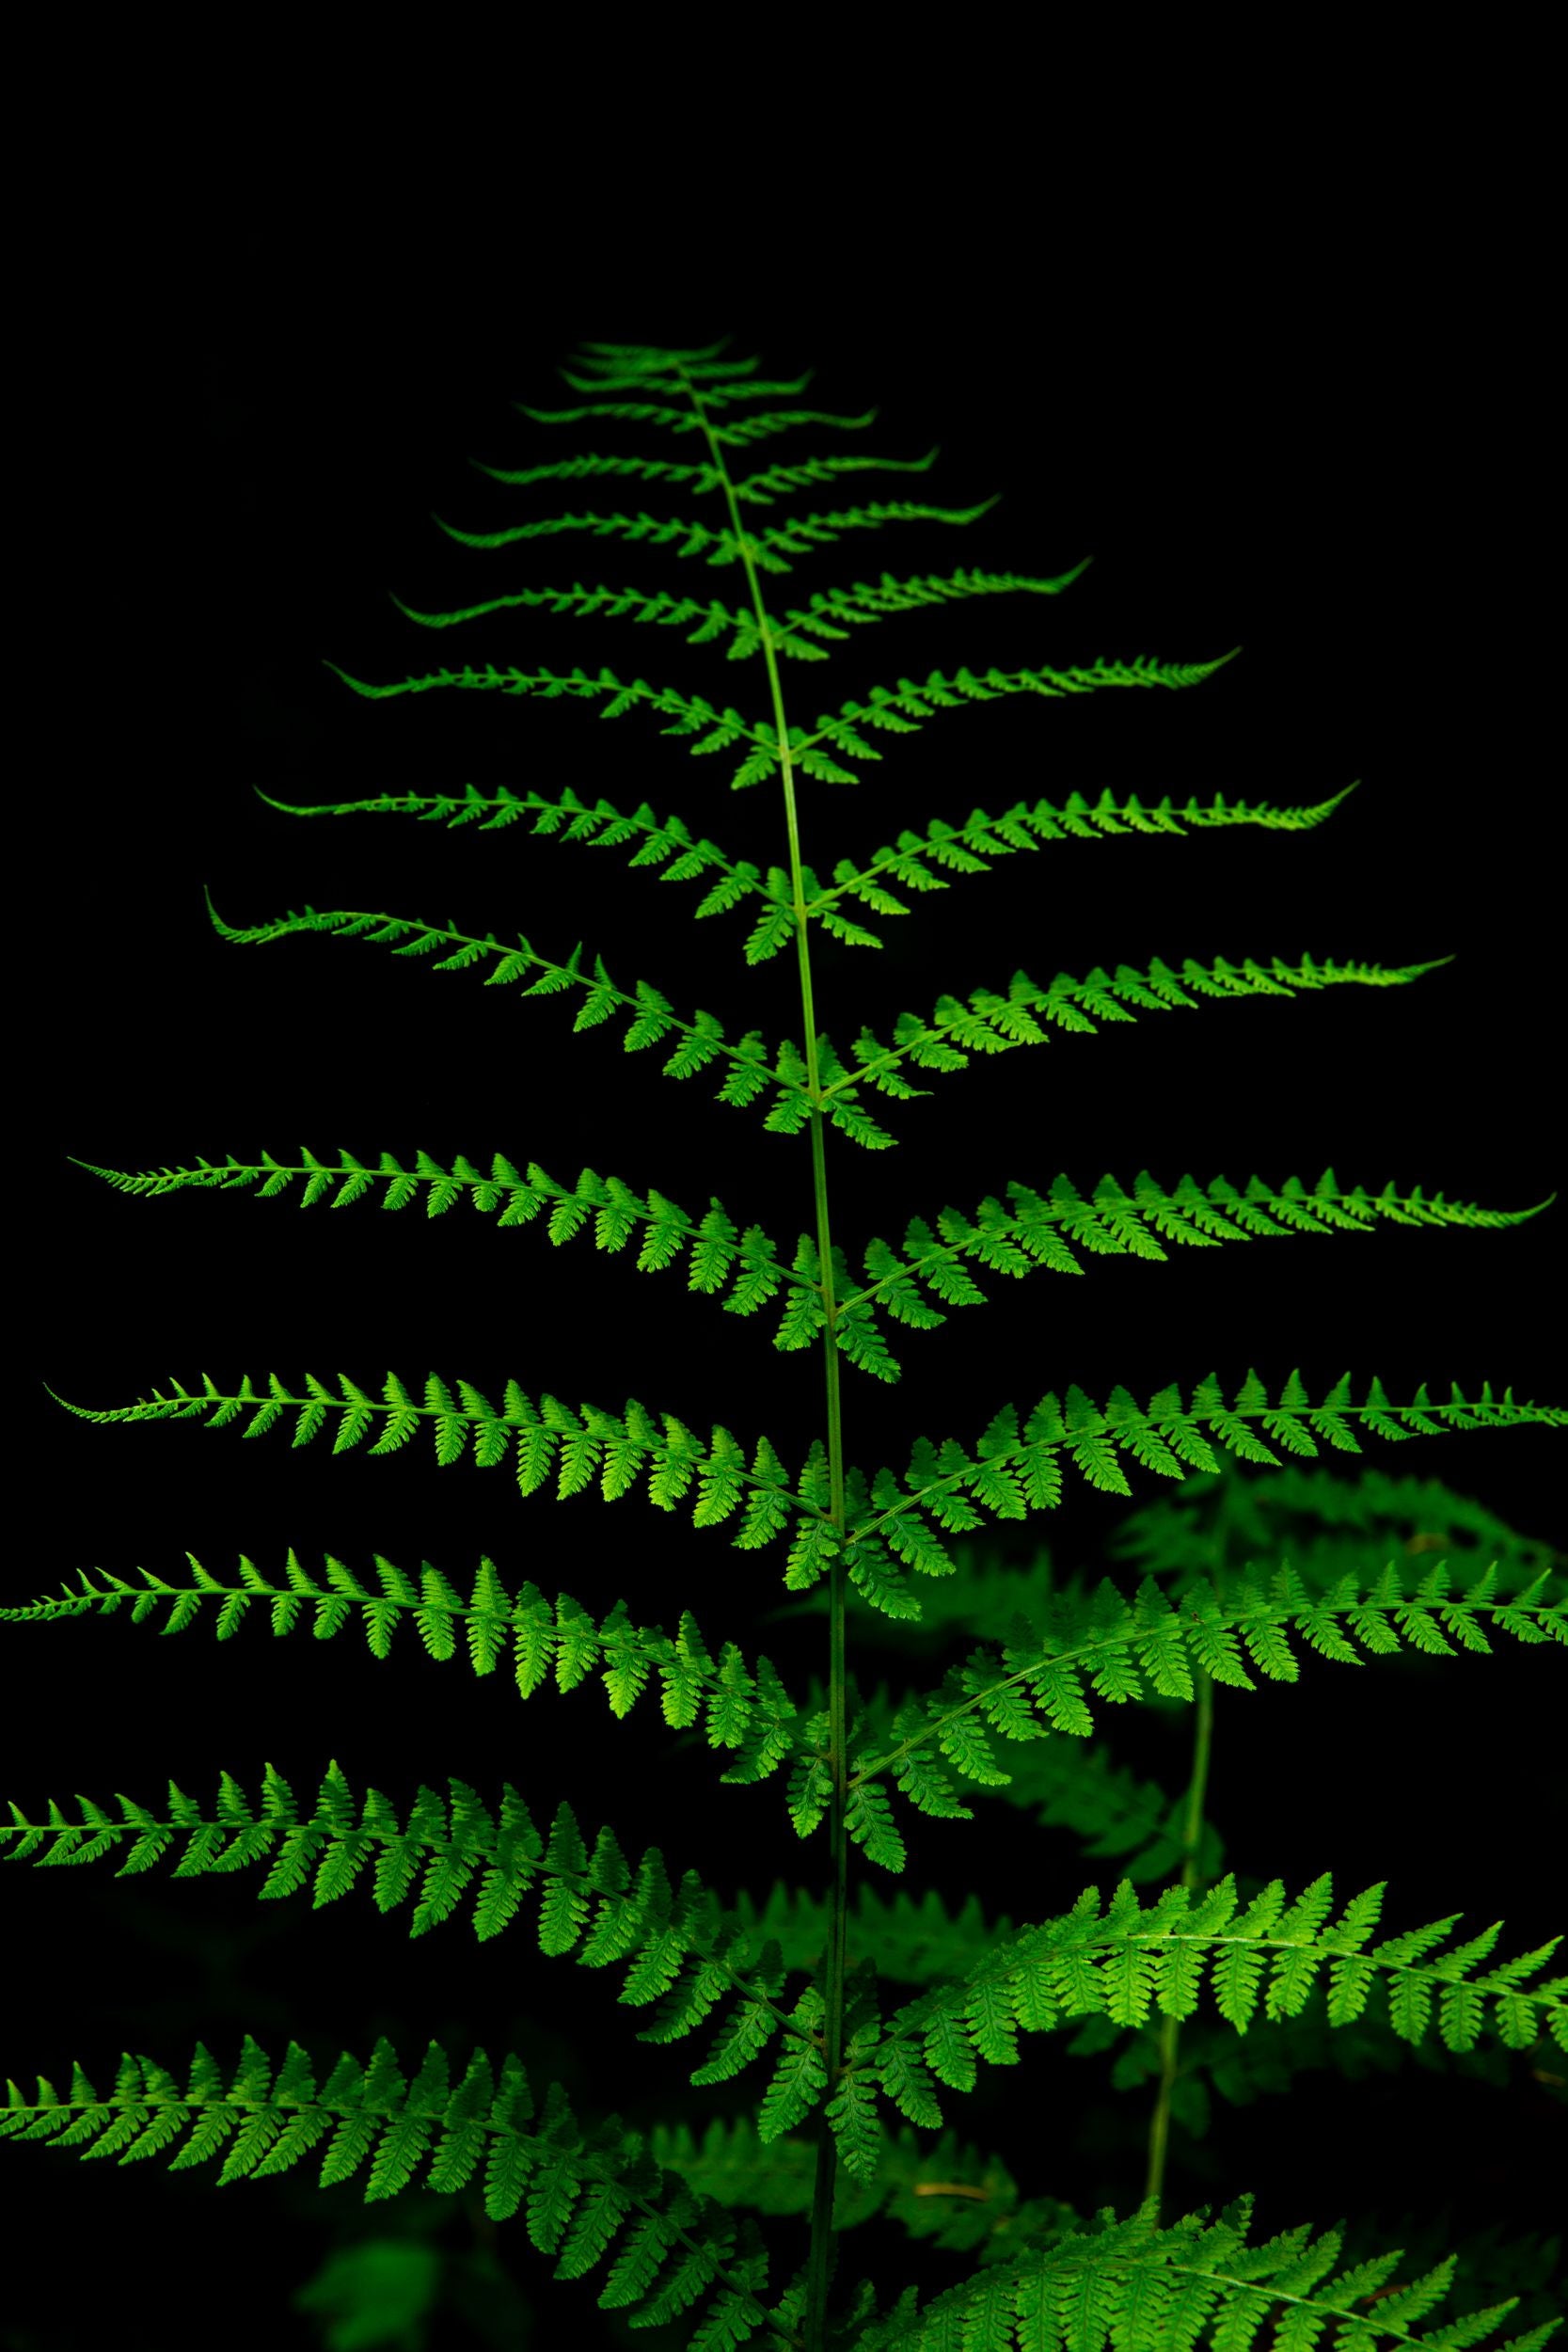 A singular vibrant green fern sits against a darkened background.